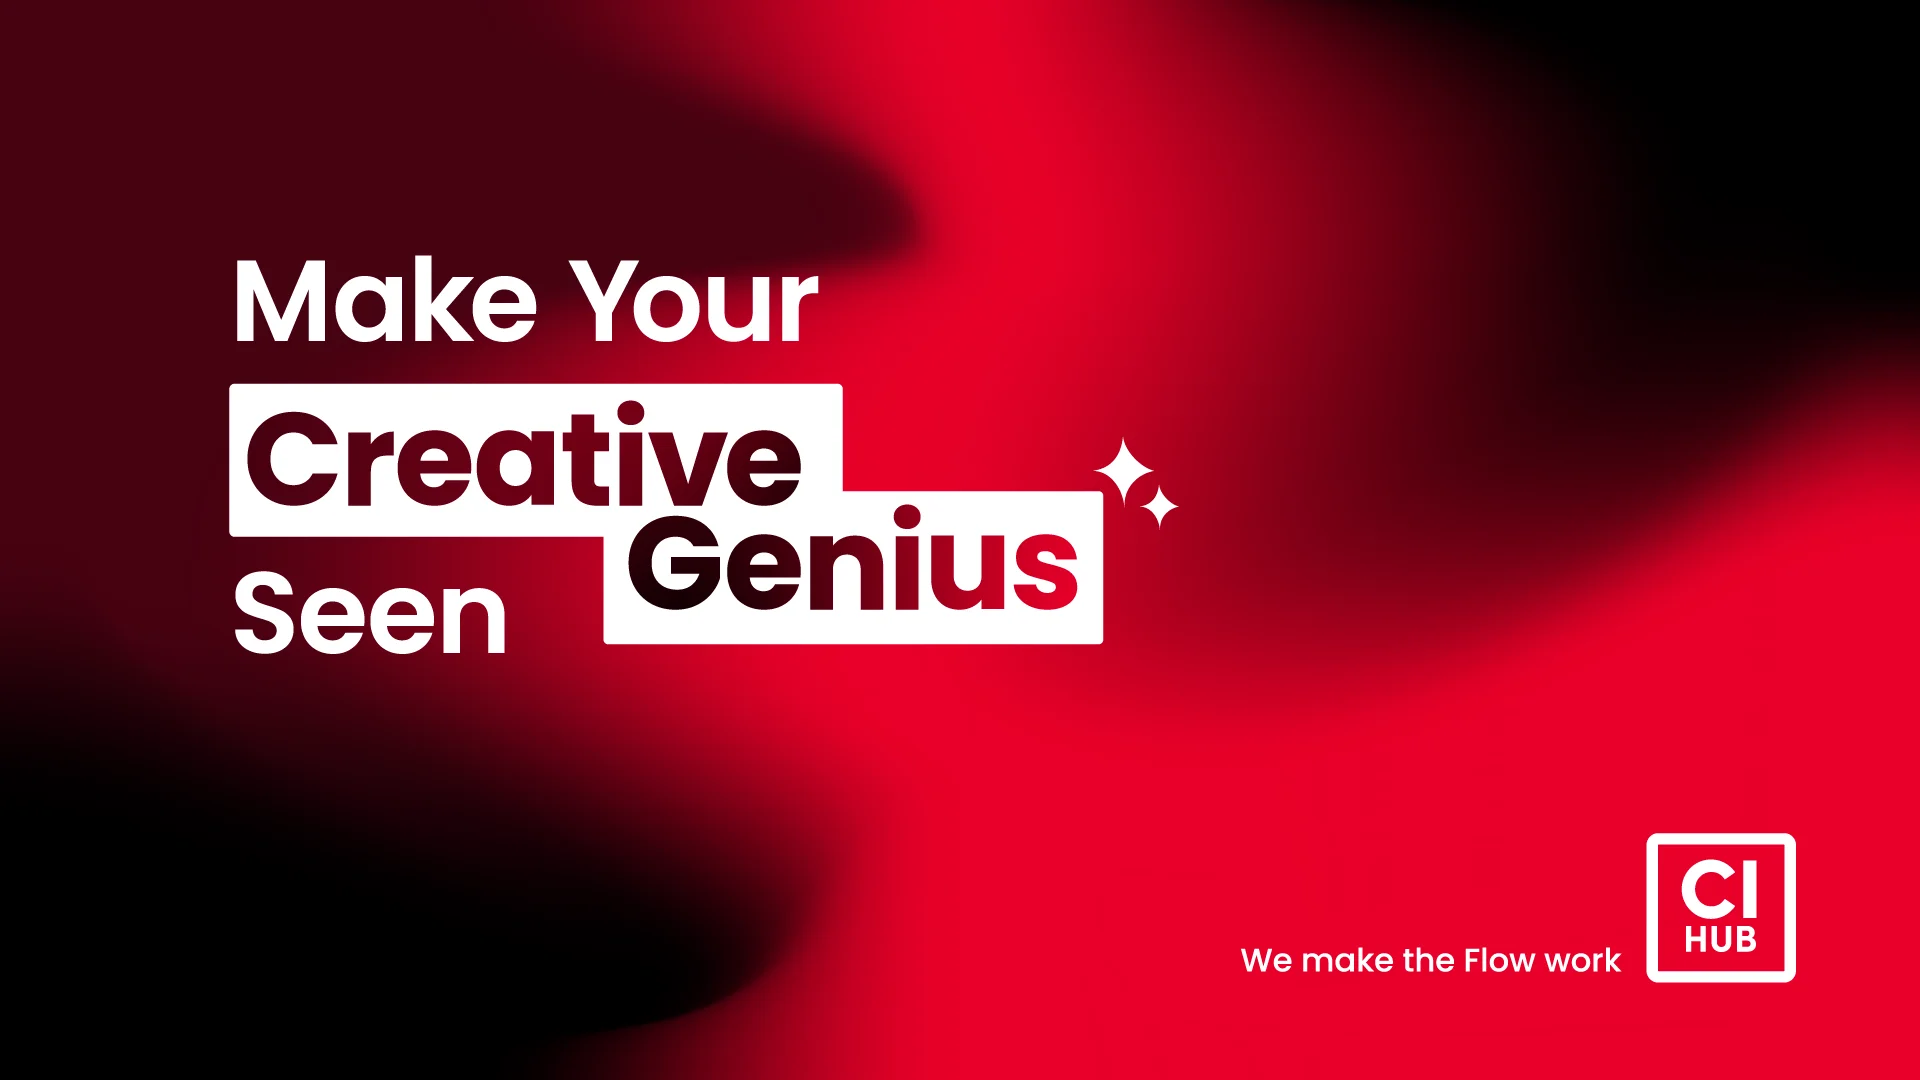 Adobe MAX London – Make your Creative Genius seen!